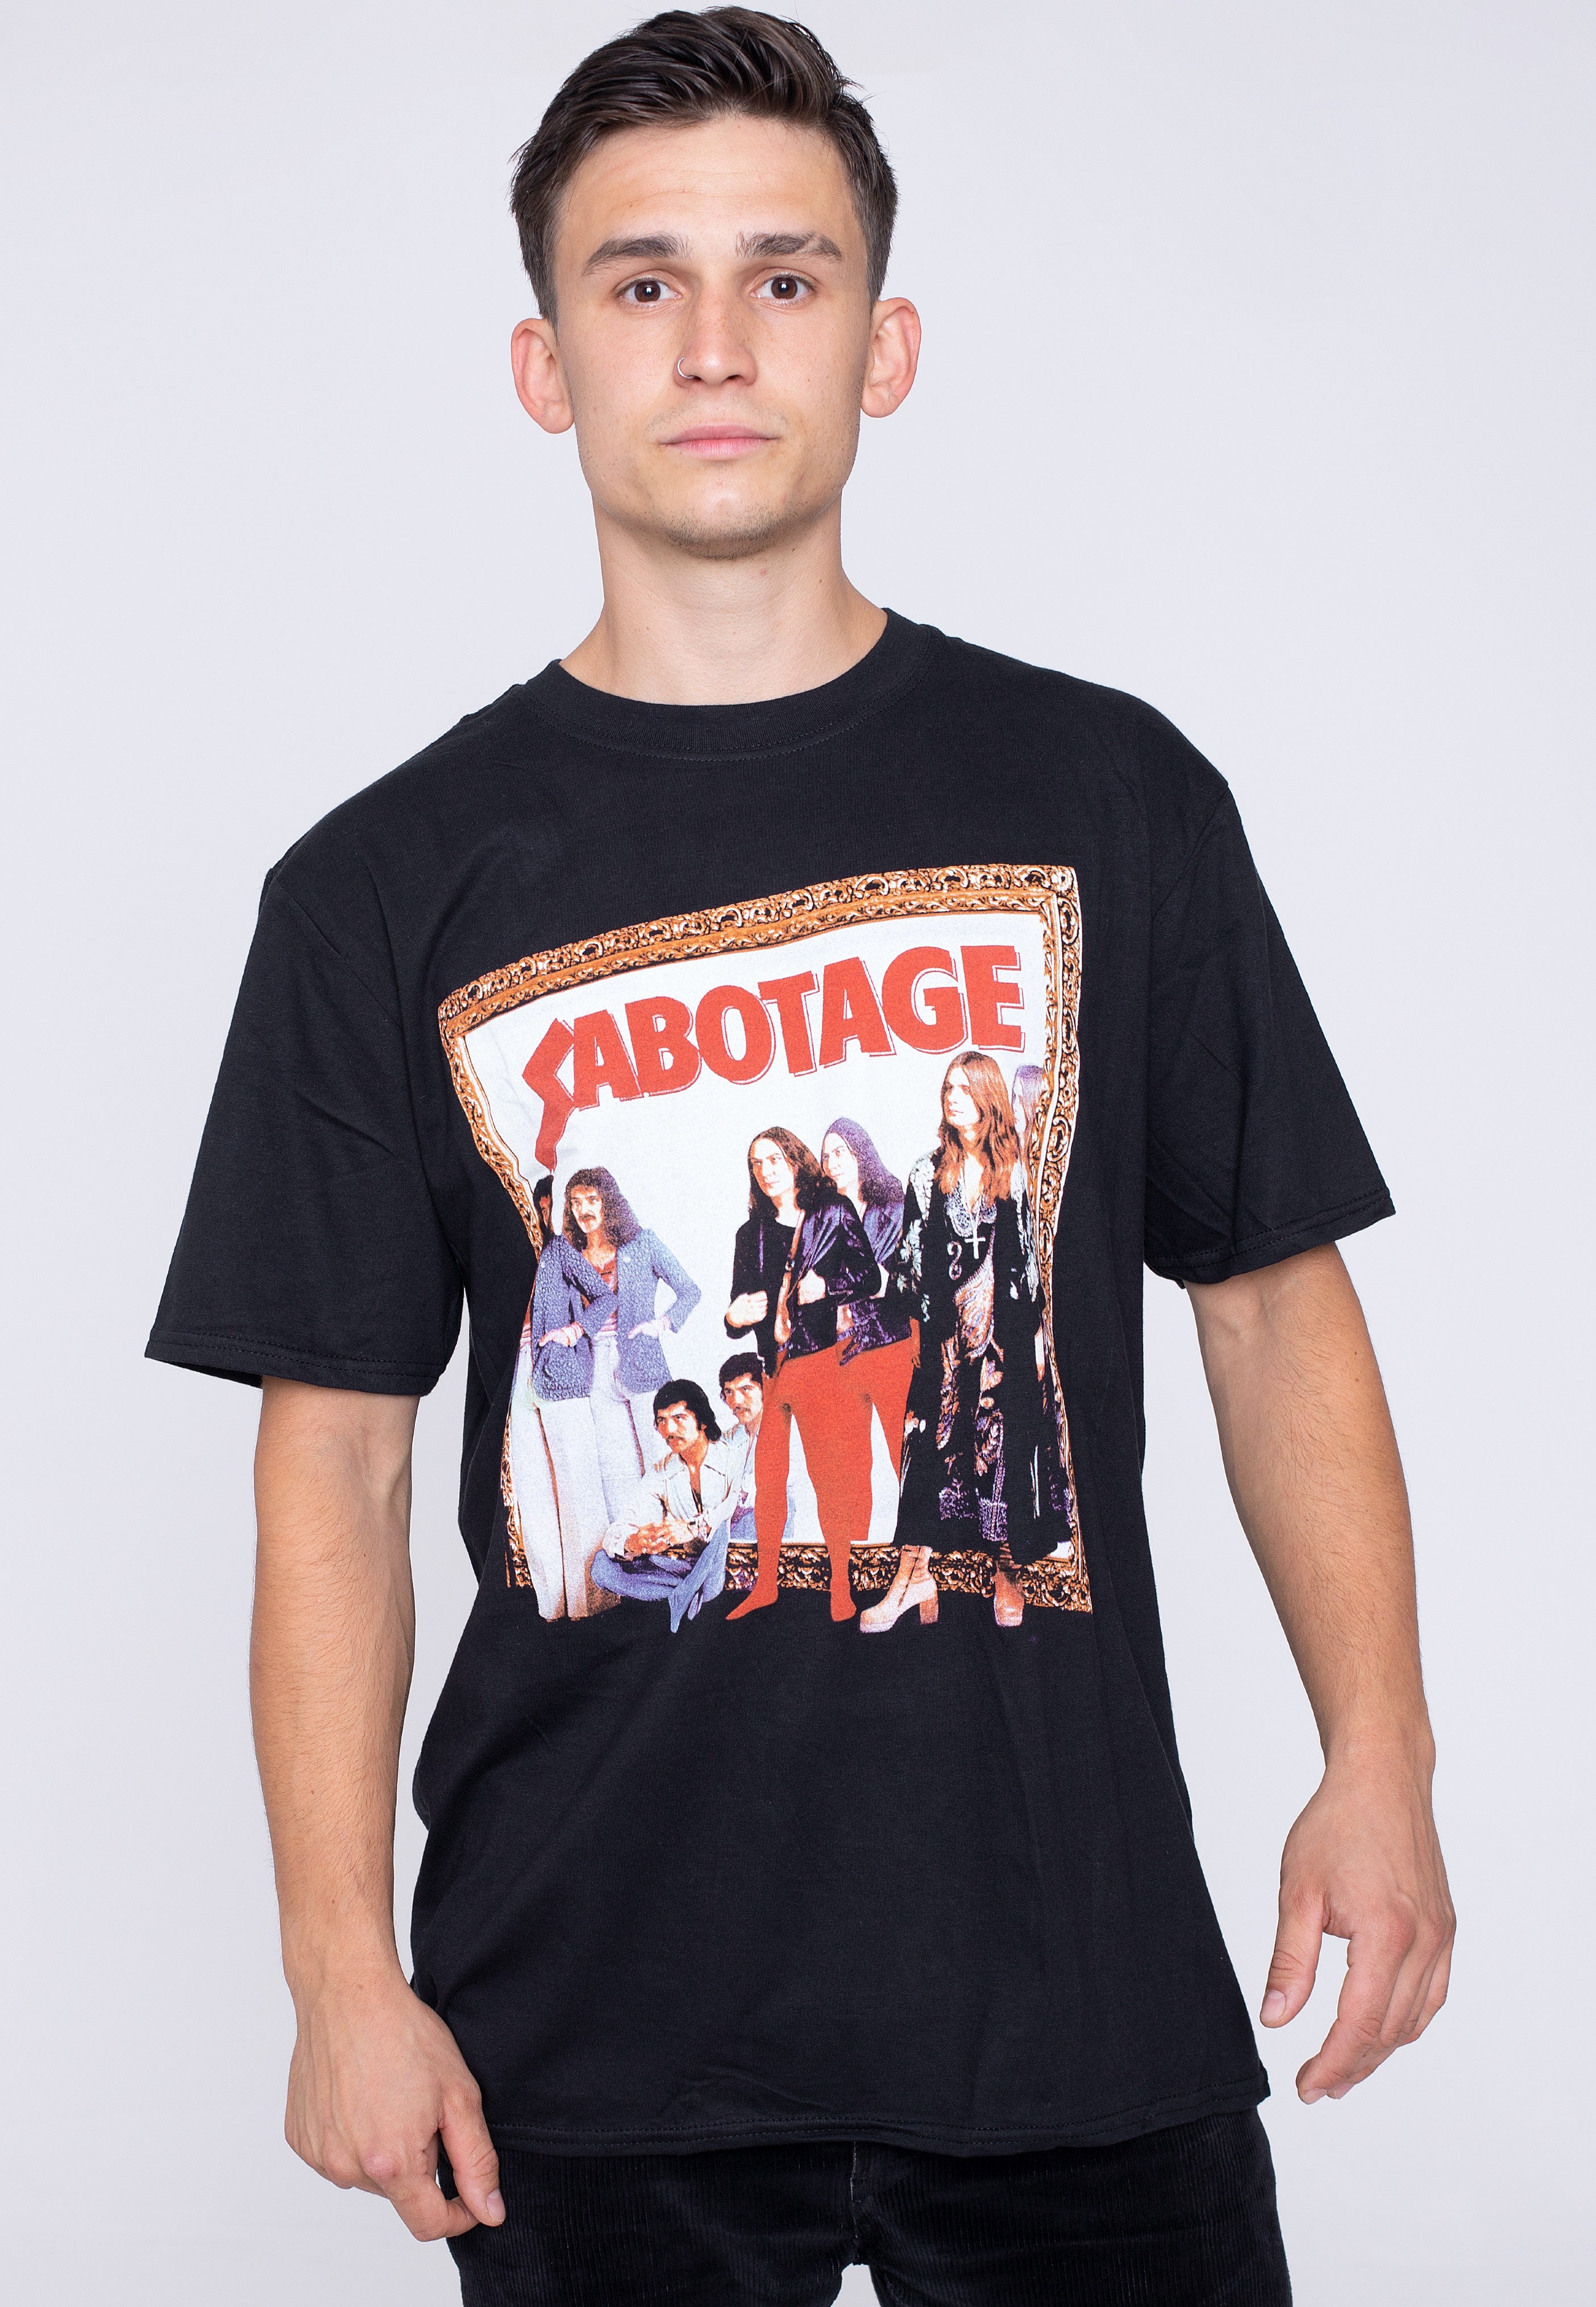 Black Sabbath - Sabotage - T-Shirt | Men-Image